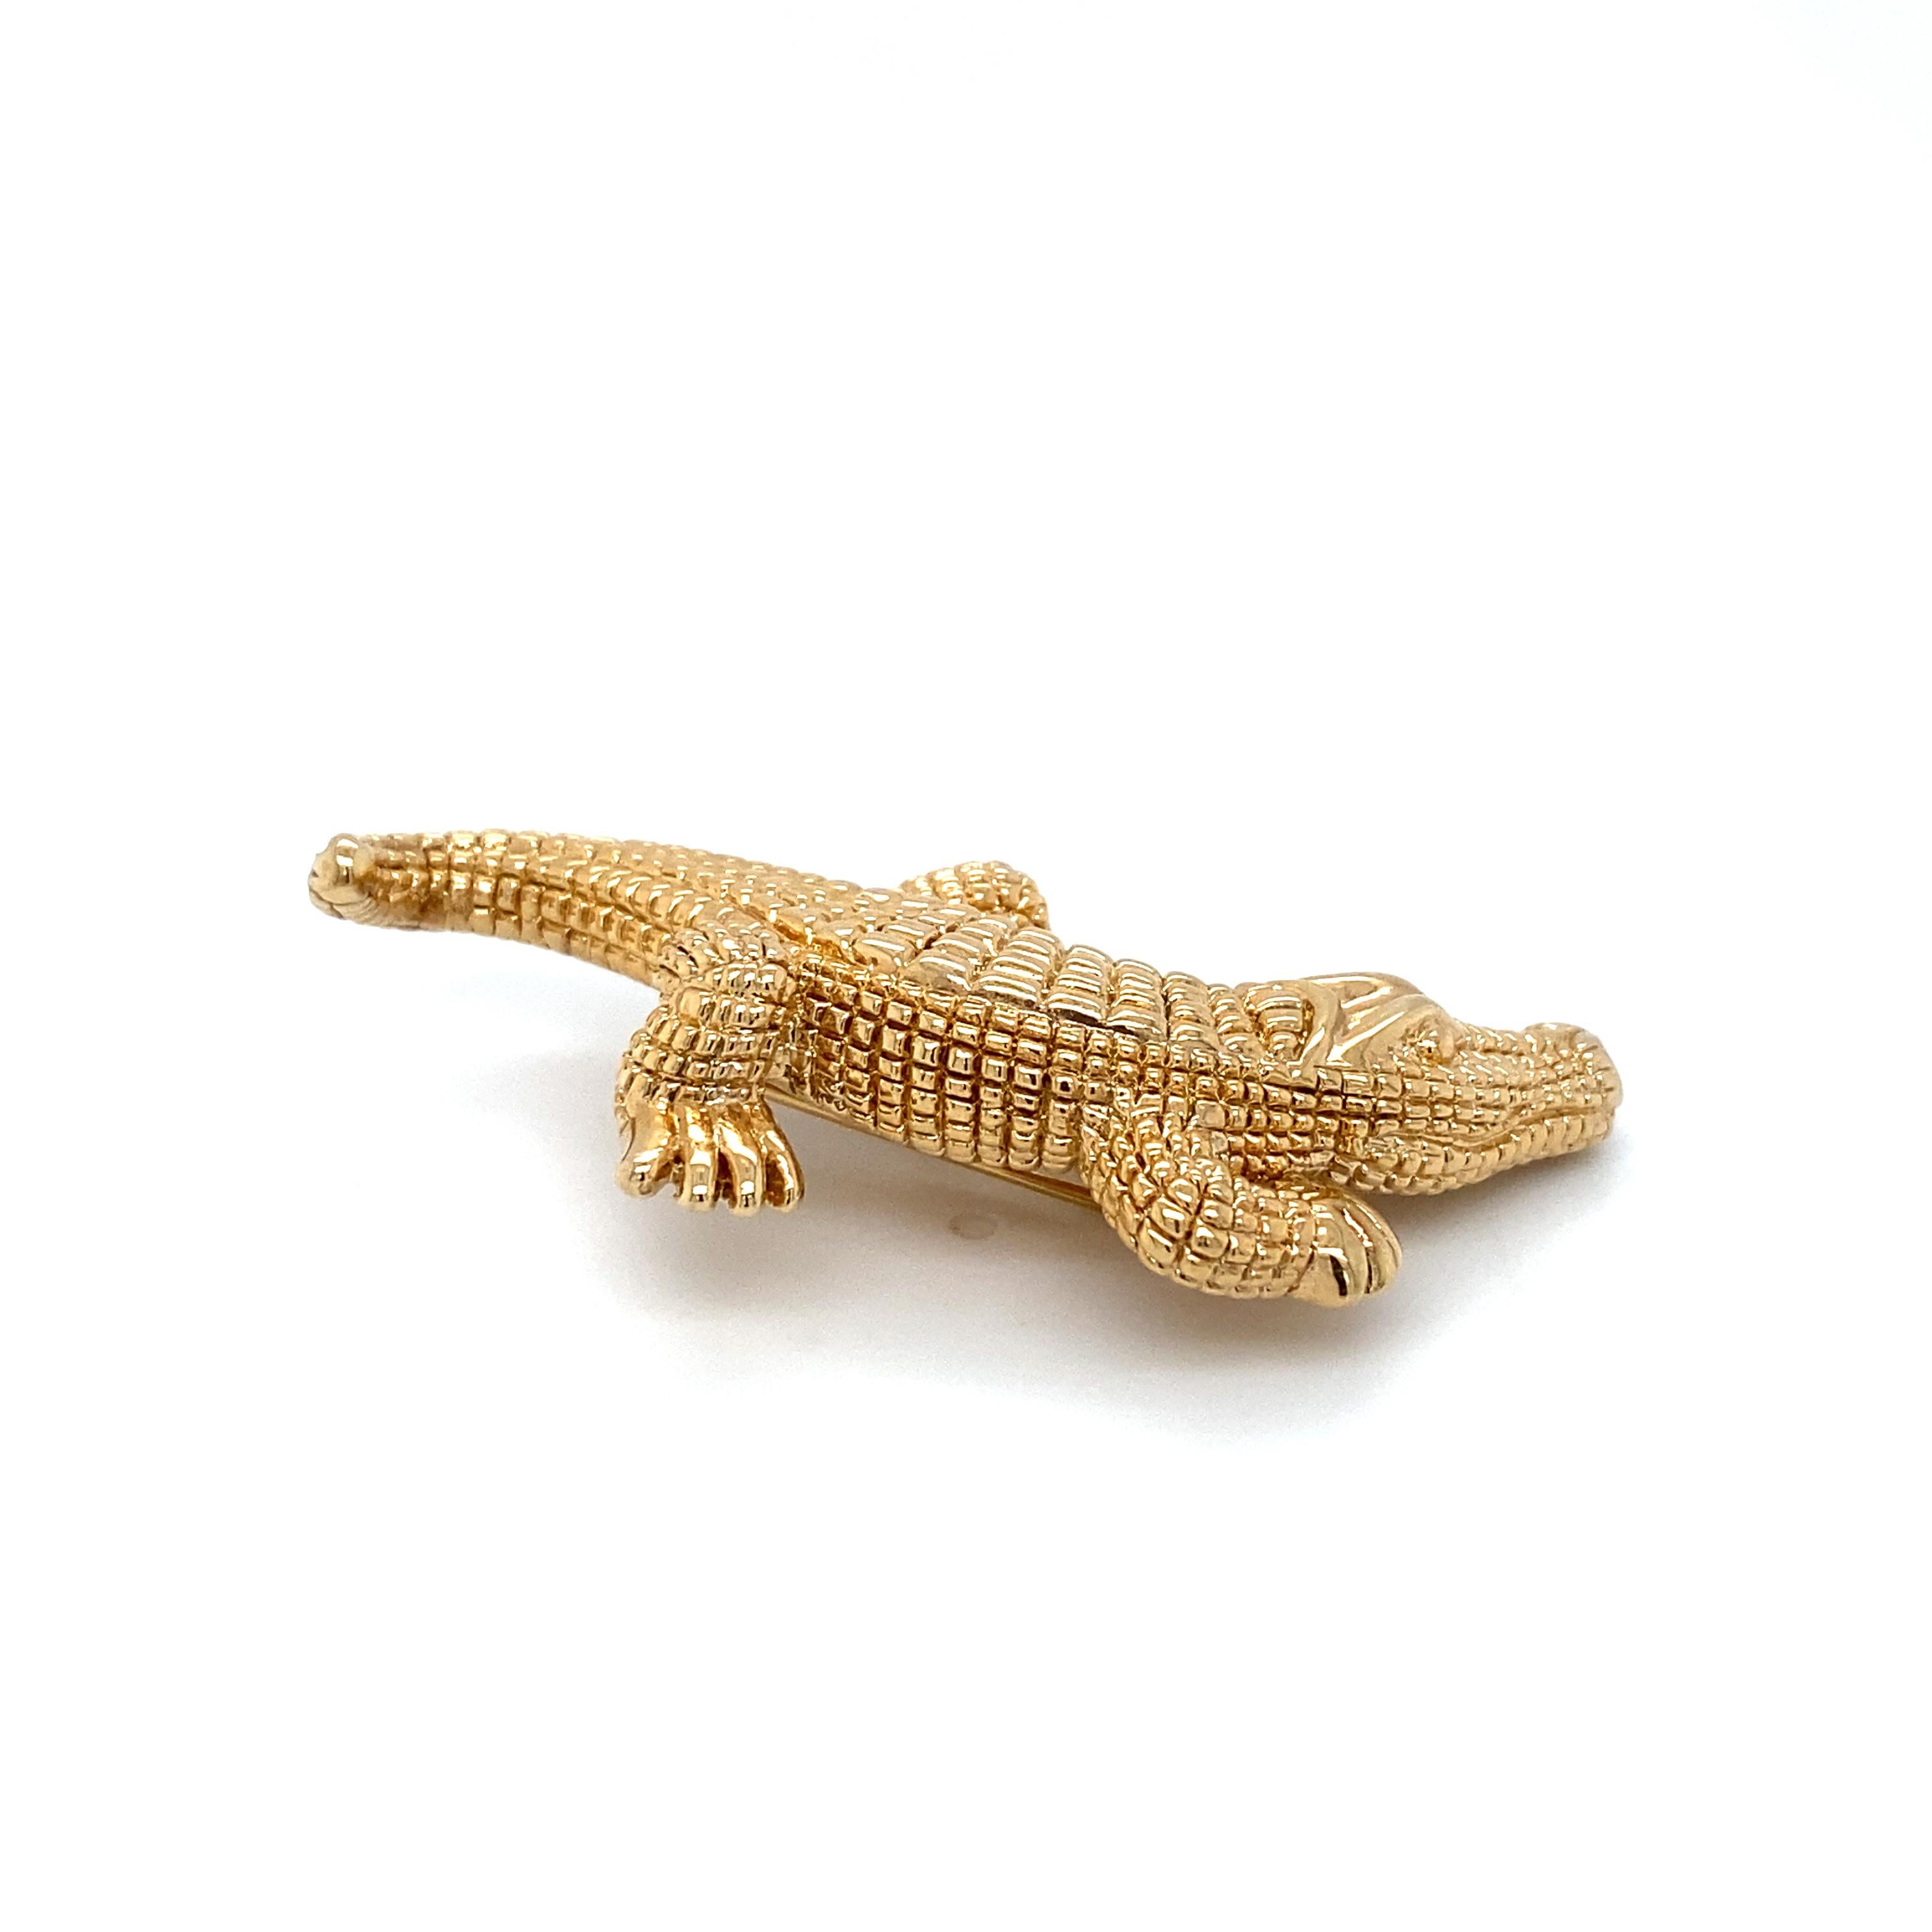 Circa 1960s Alligator Brooch in 14 Karat Gold For Sale 3